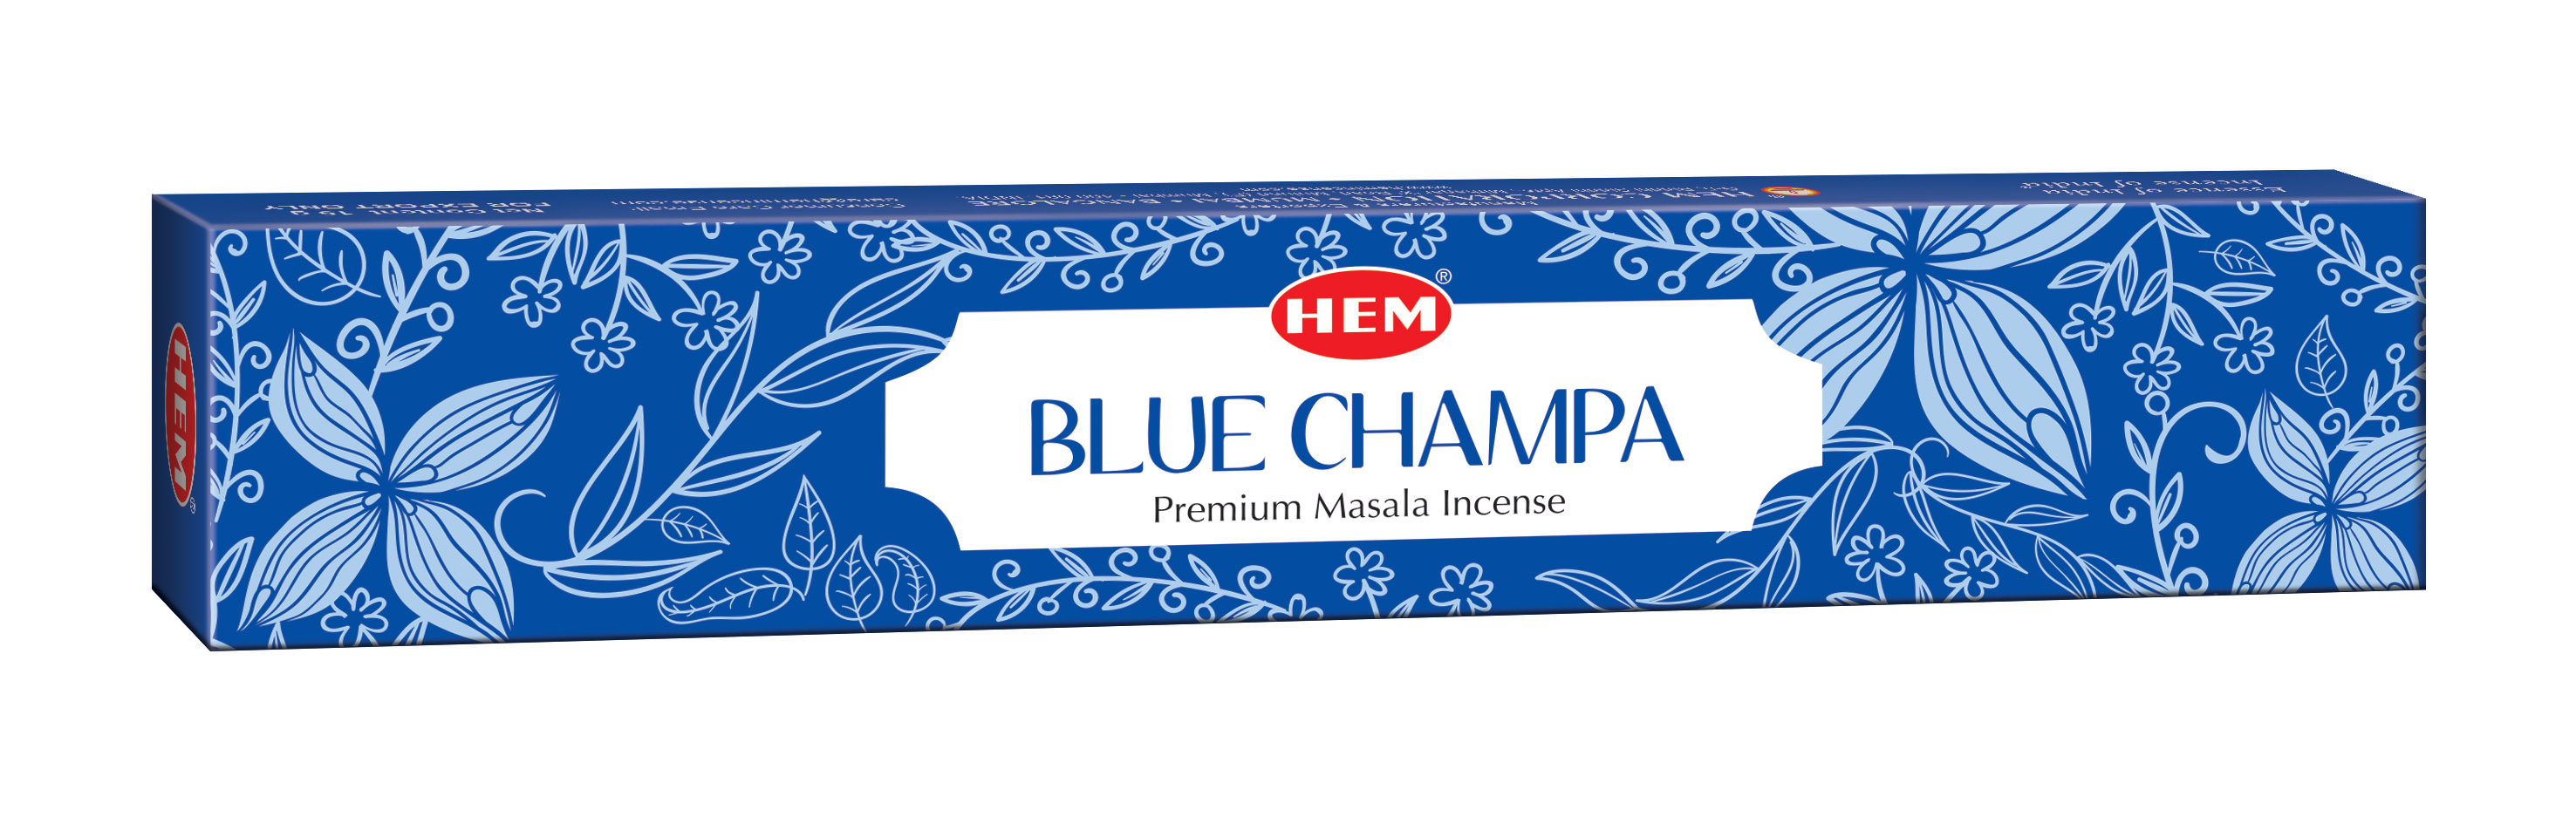 HEM Weihrauch Blaue Champa Masala (12er Pack)